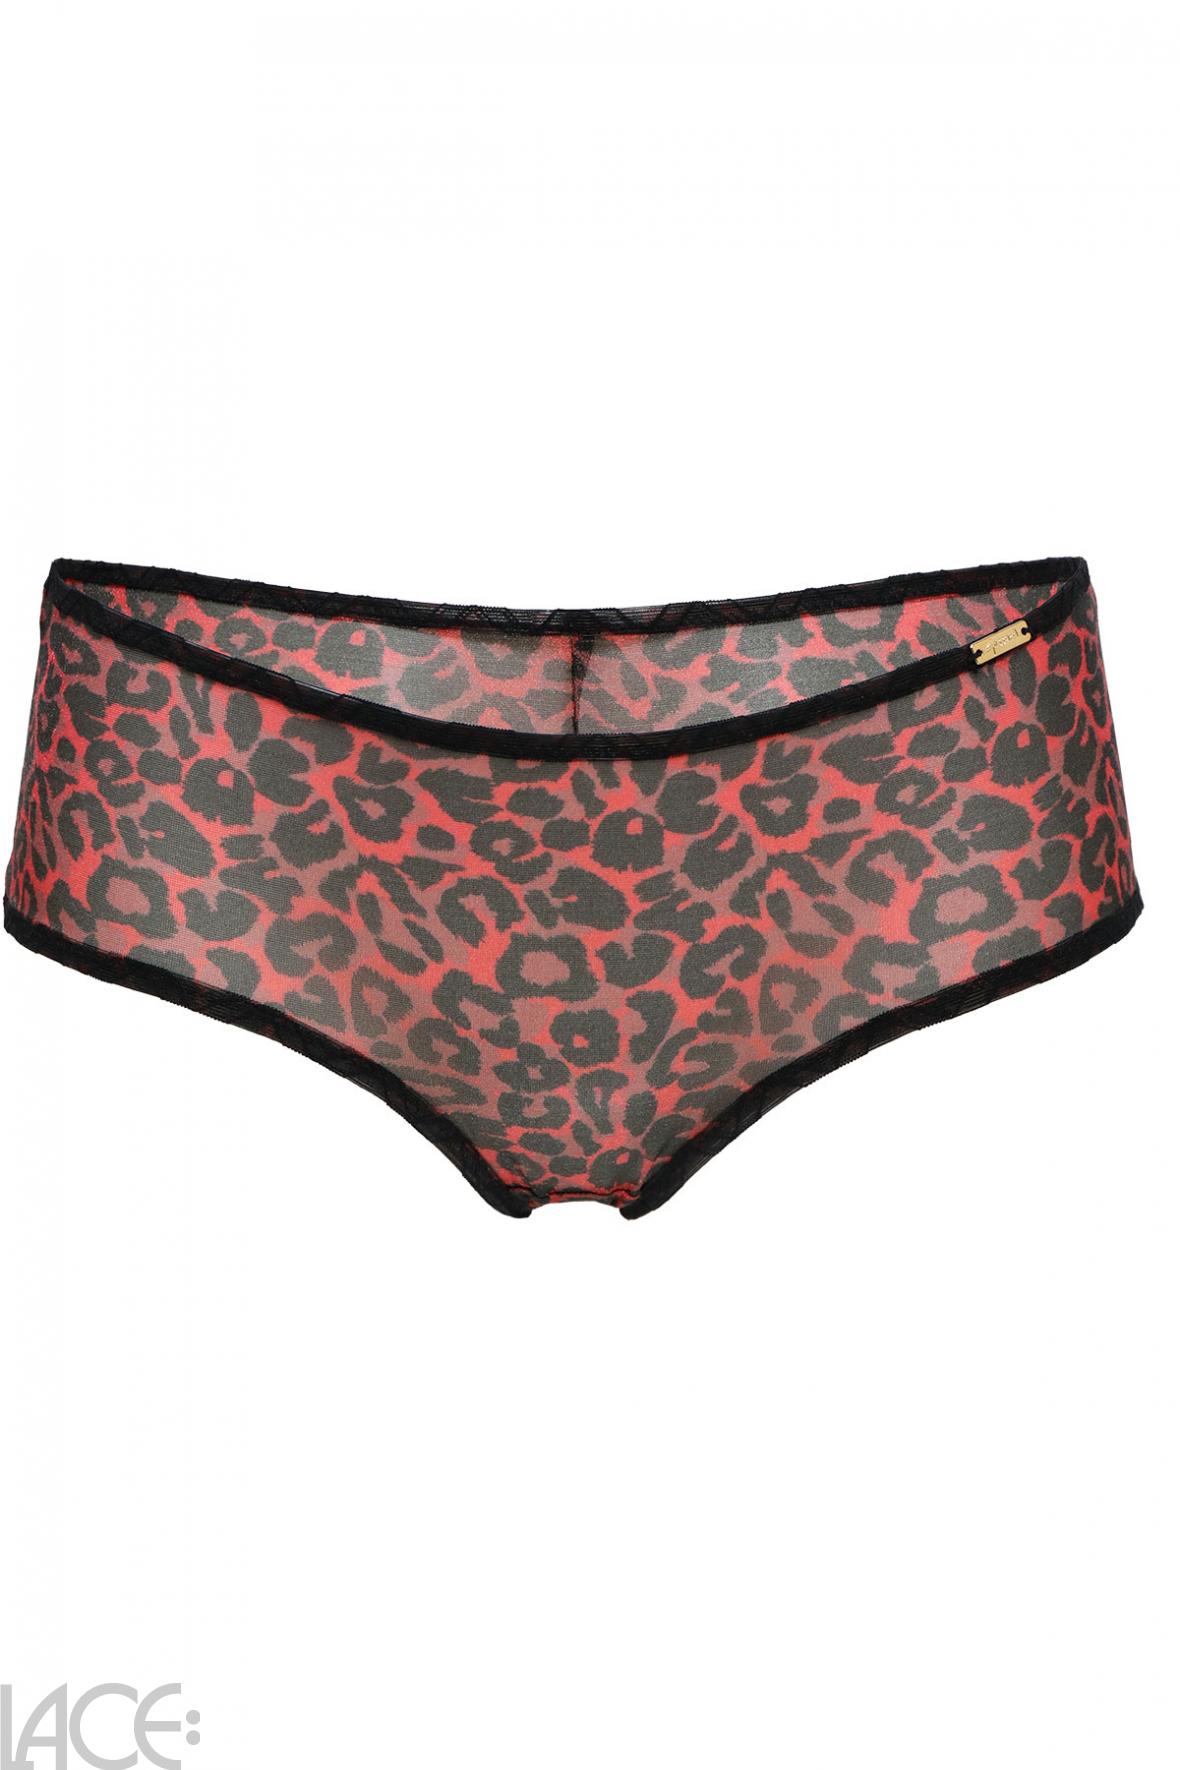 Gossard Glossies Leopard Short – Lace-Lingerie.com